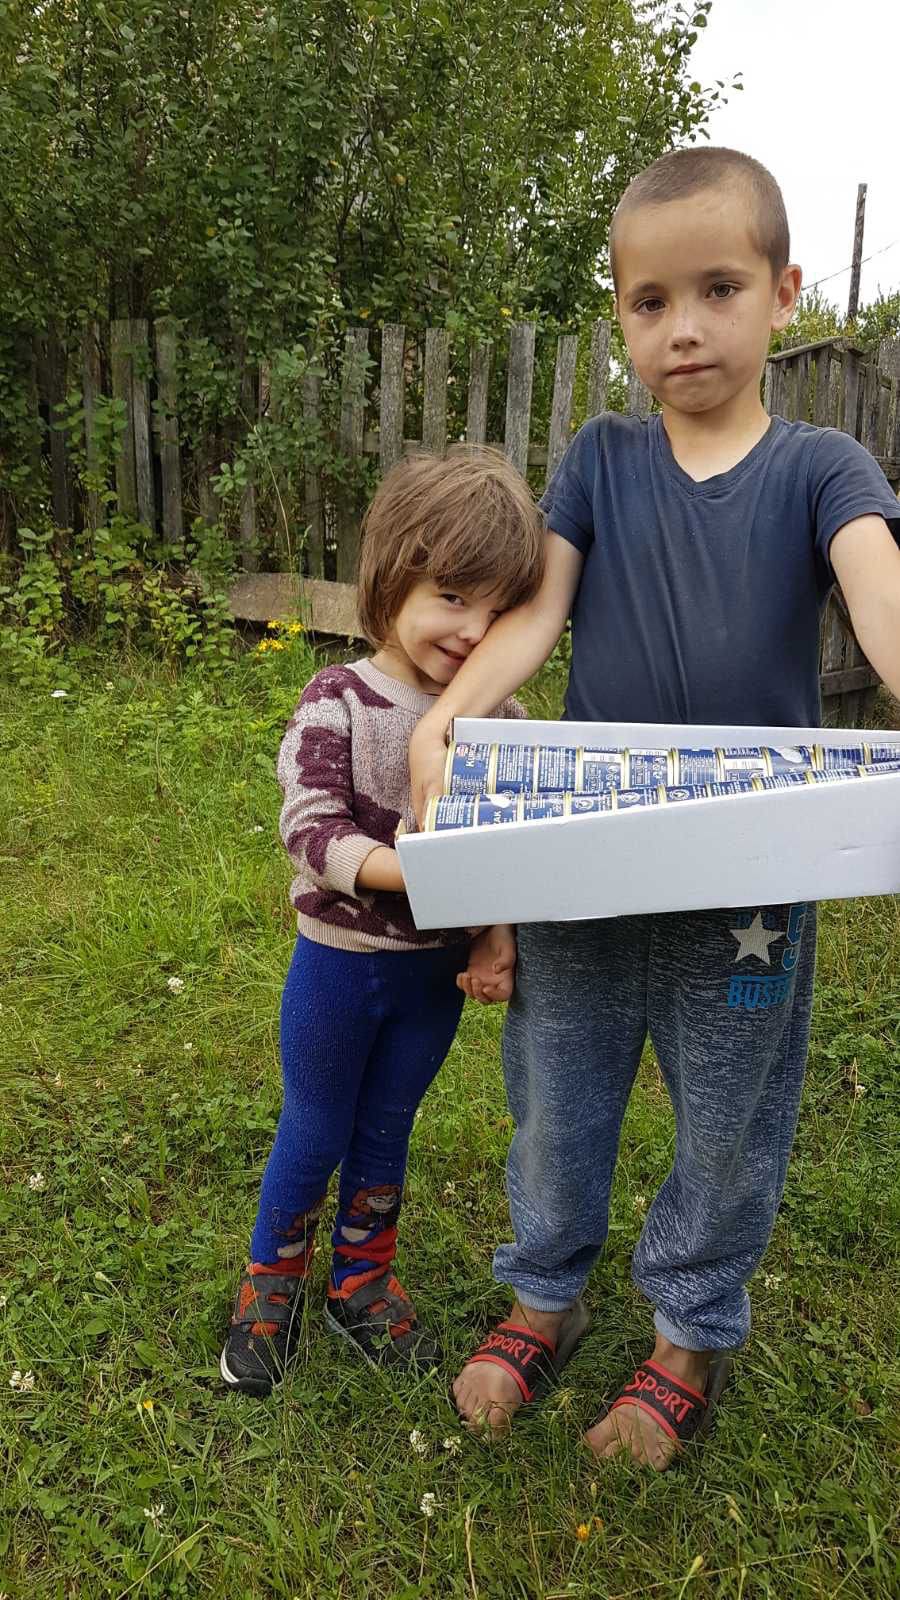 Ukrainian kids thankful for food donation.